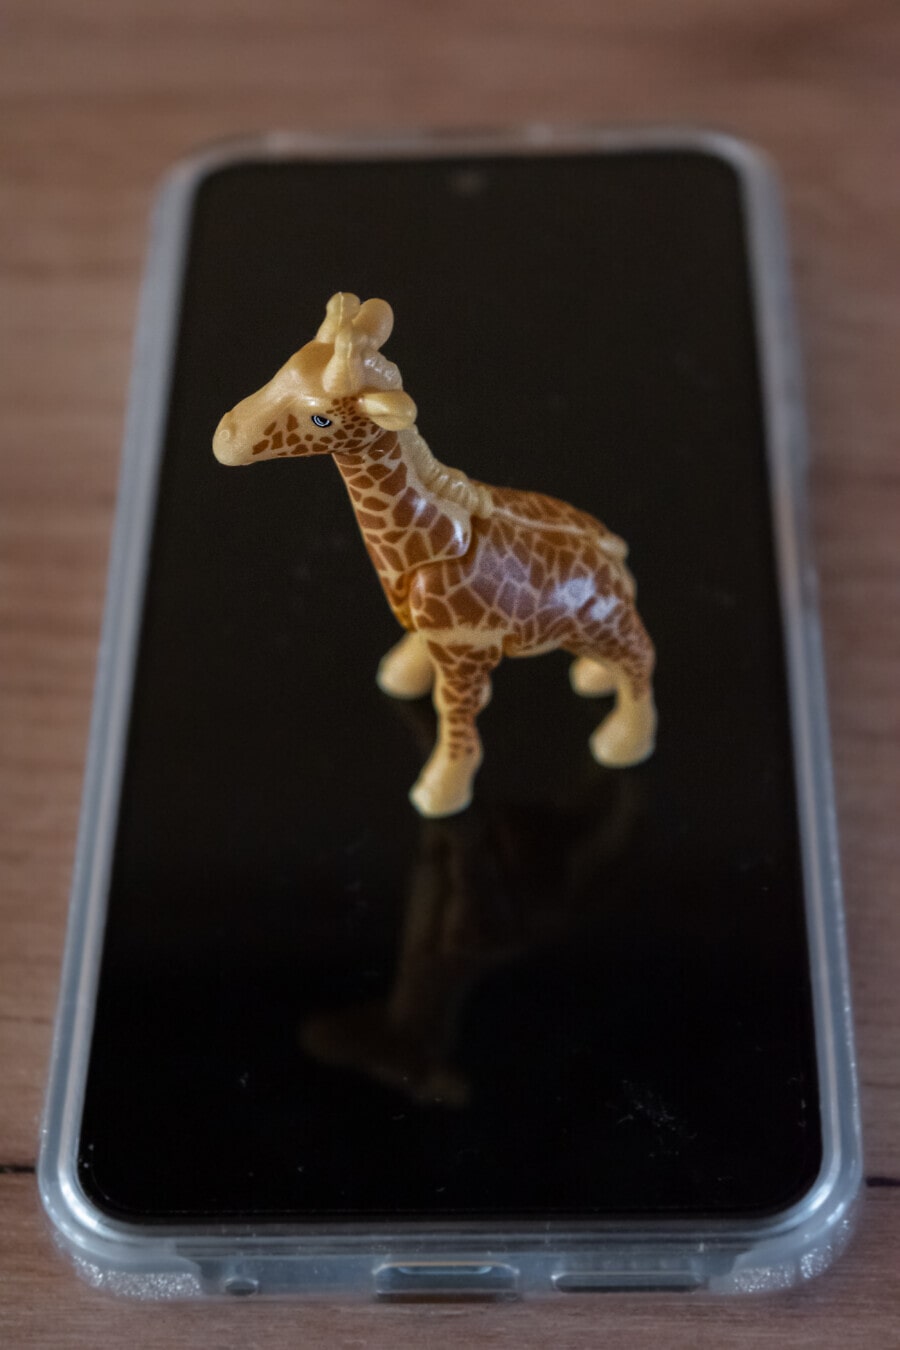 Nærbilde av miniatyr plast sjiraff leketøy på mobiltelefonen